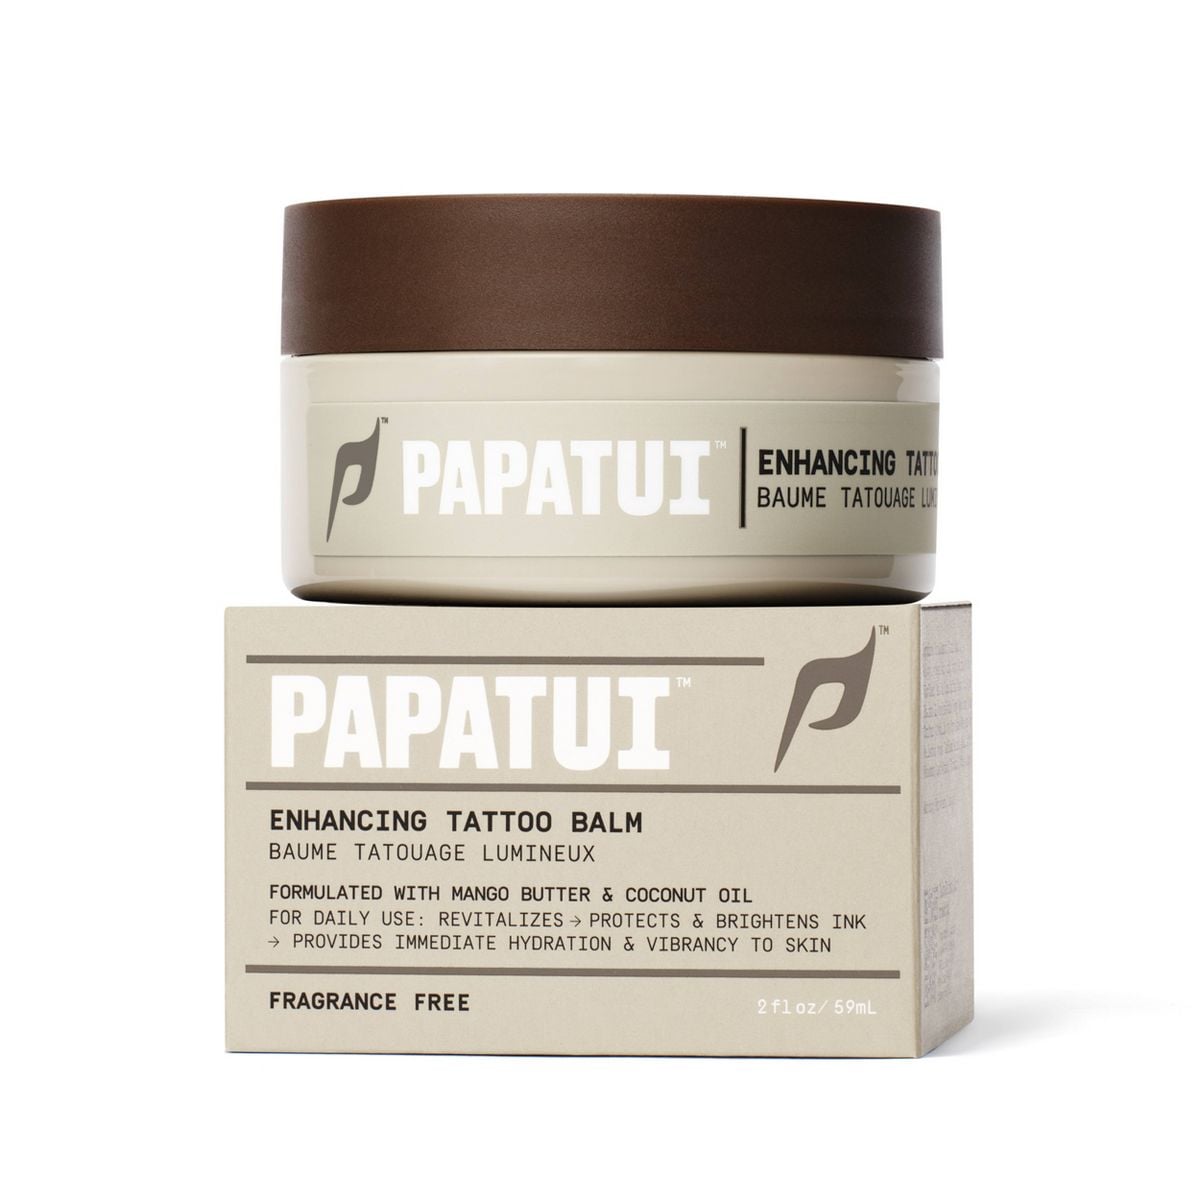 Papatui Is Dwayne Johnson's New Beauty Brand